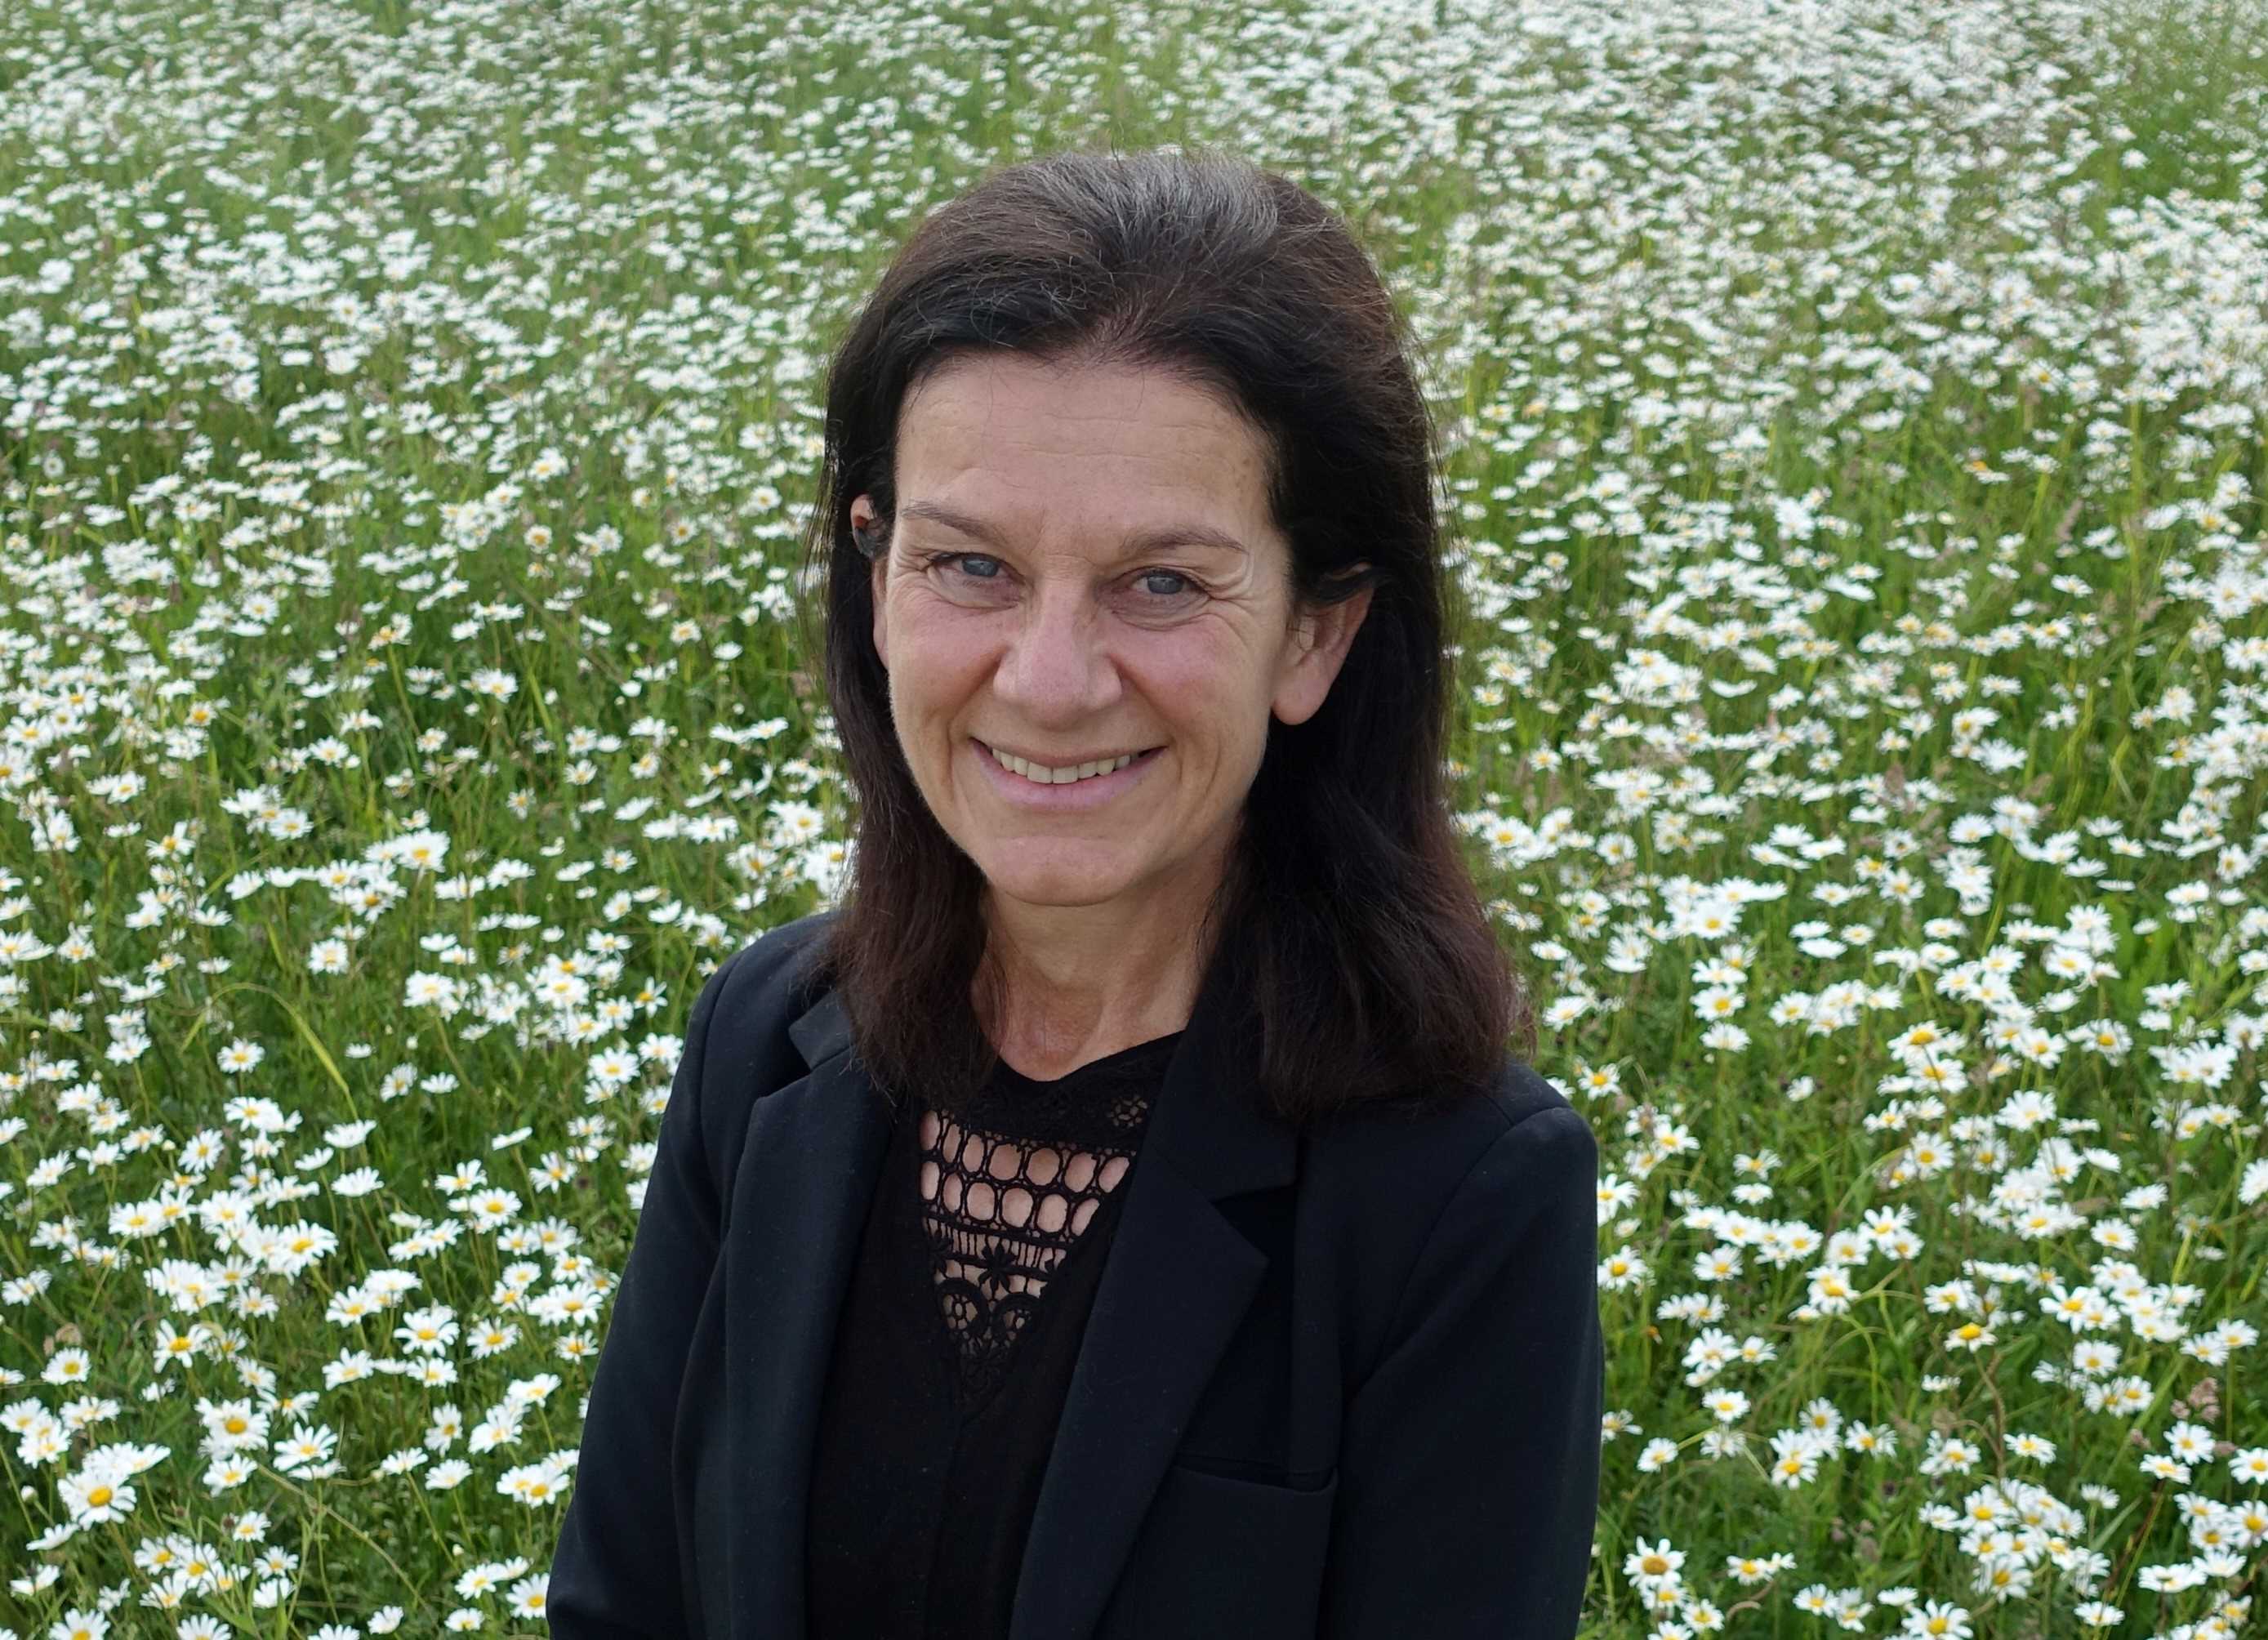 Cllr Bridget Smith, Leader of the South Cambridgeshire District Council